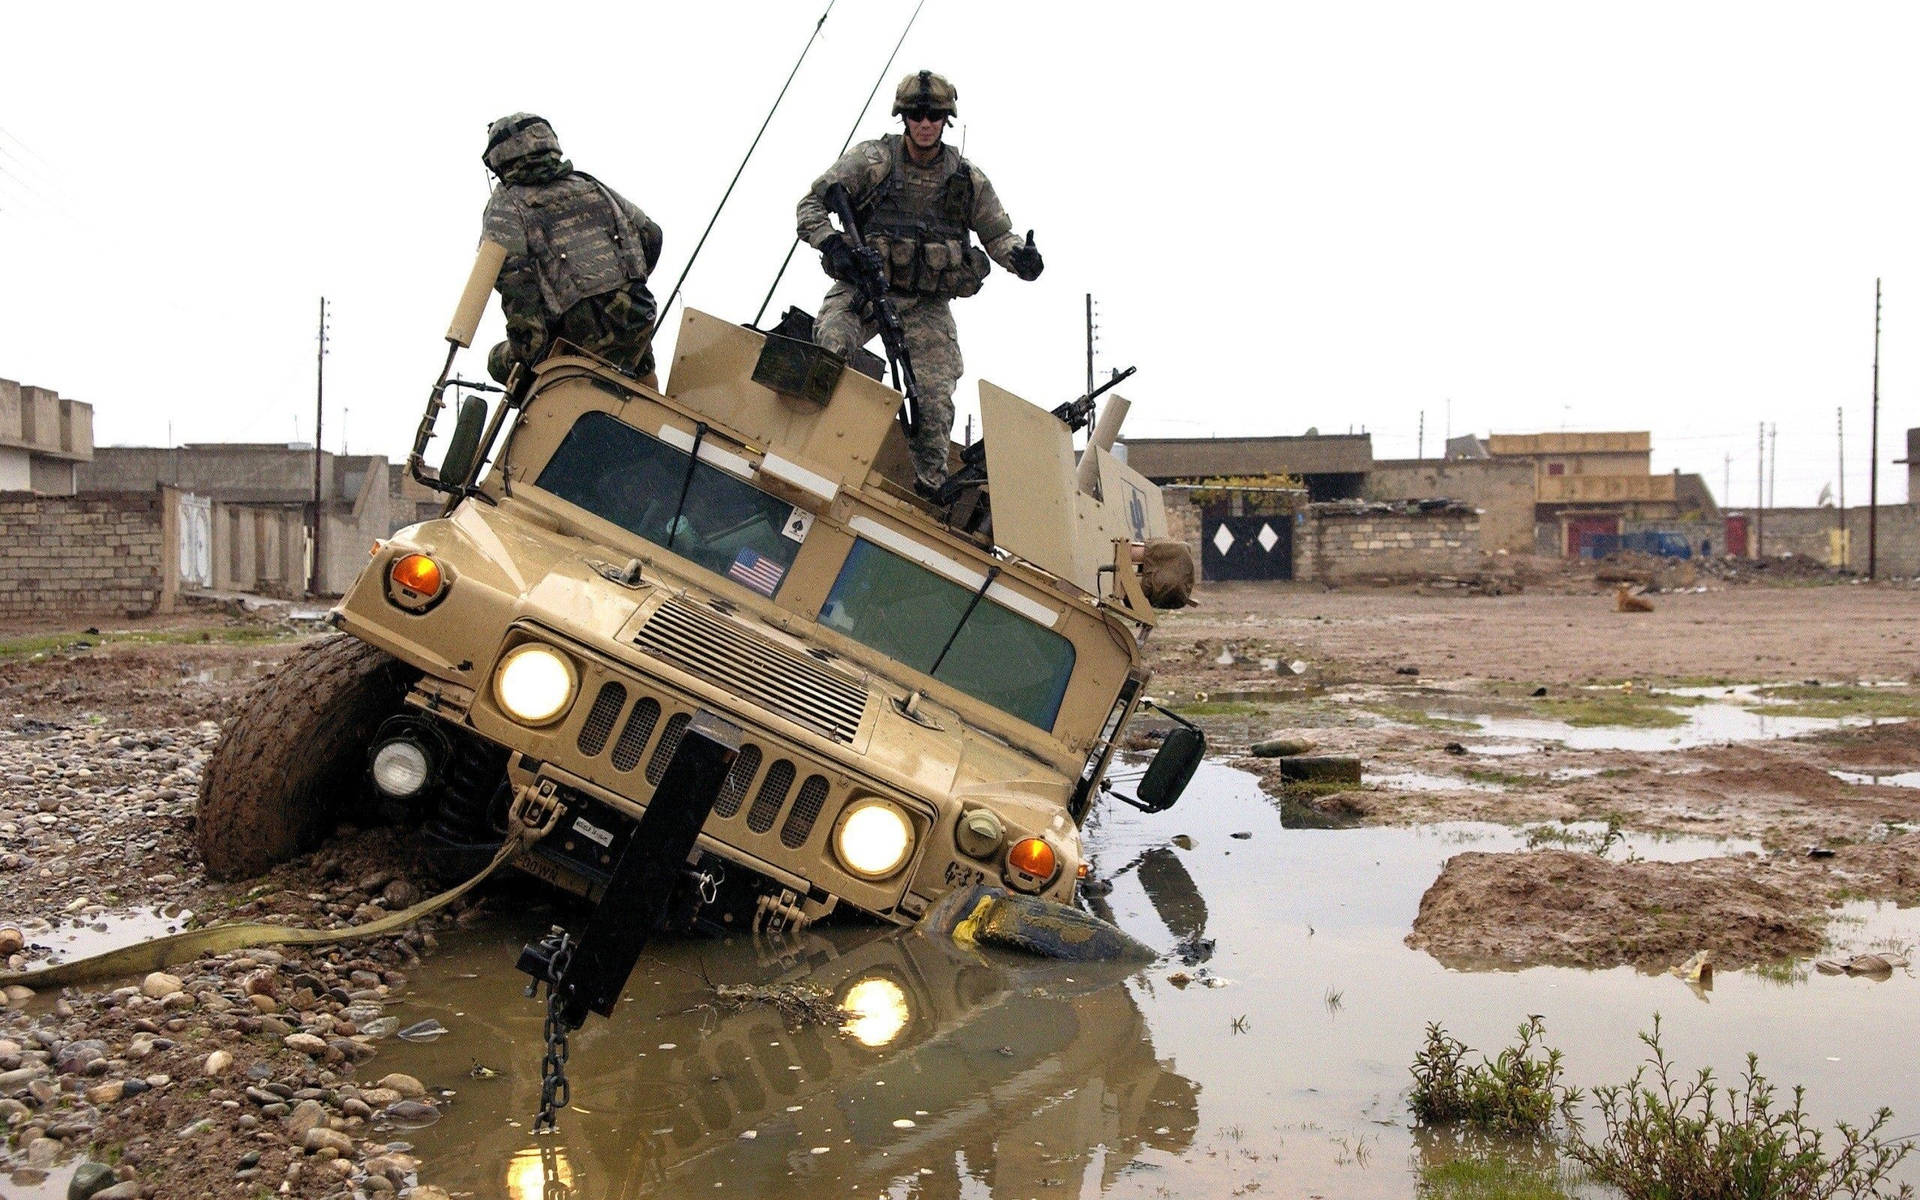 Us Army Humvee In Mud Puddle Background